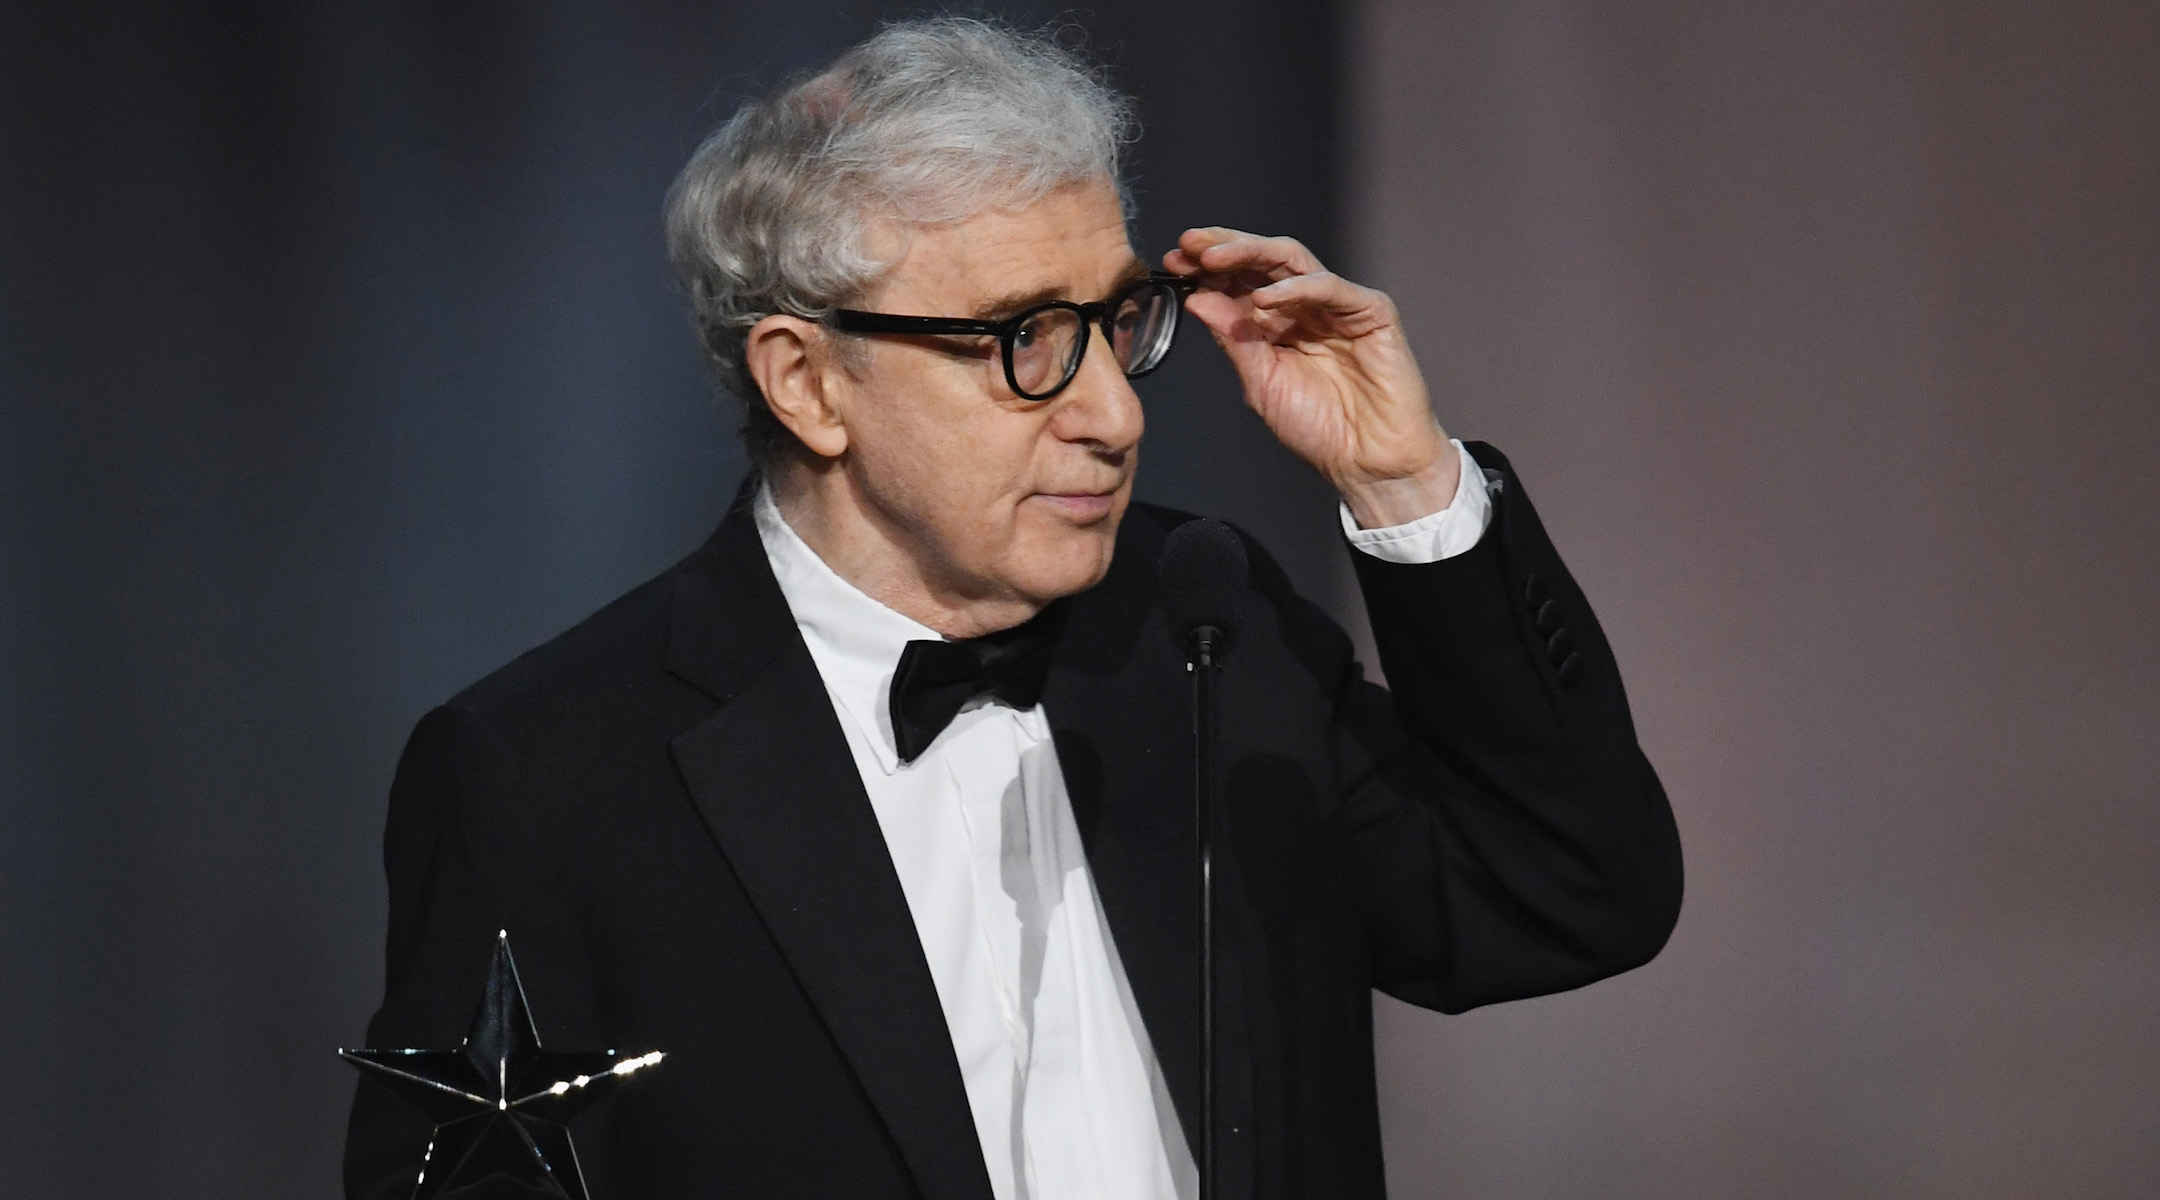 Gli 85 anni di Woody Allen (tra commedie intramontabili e scandali)